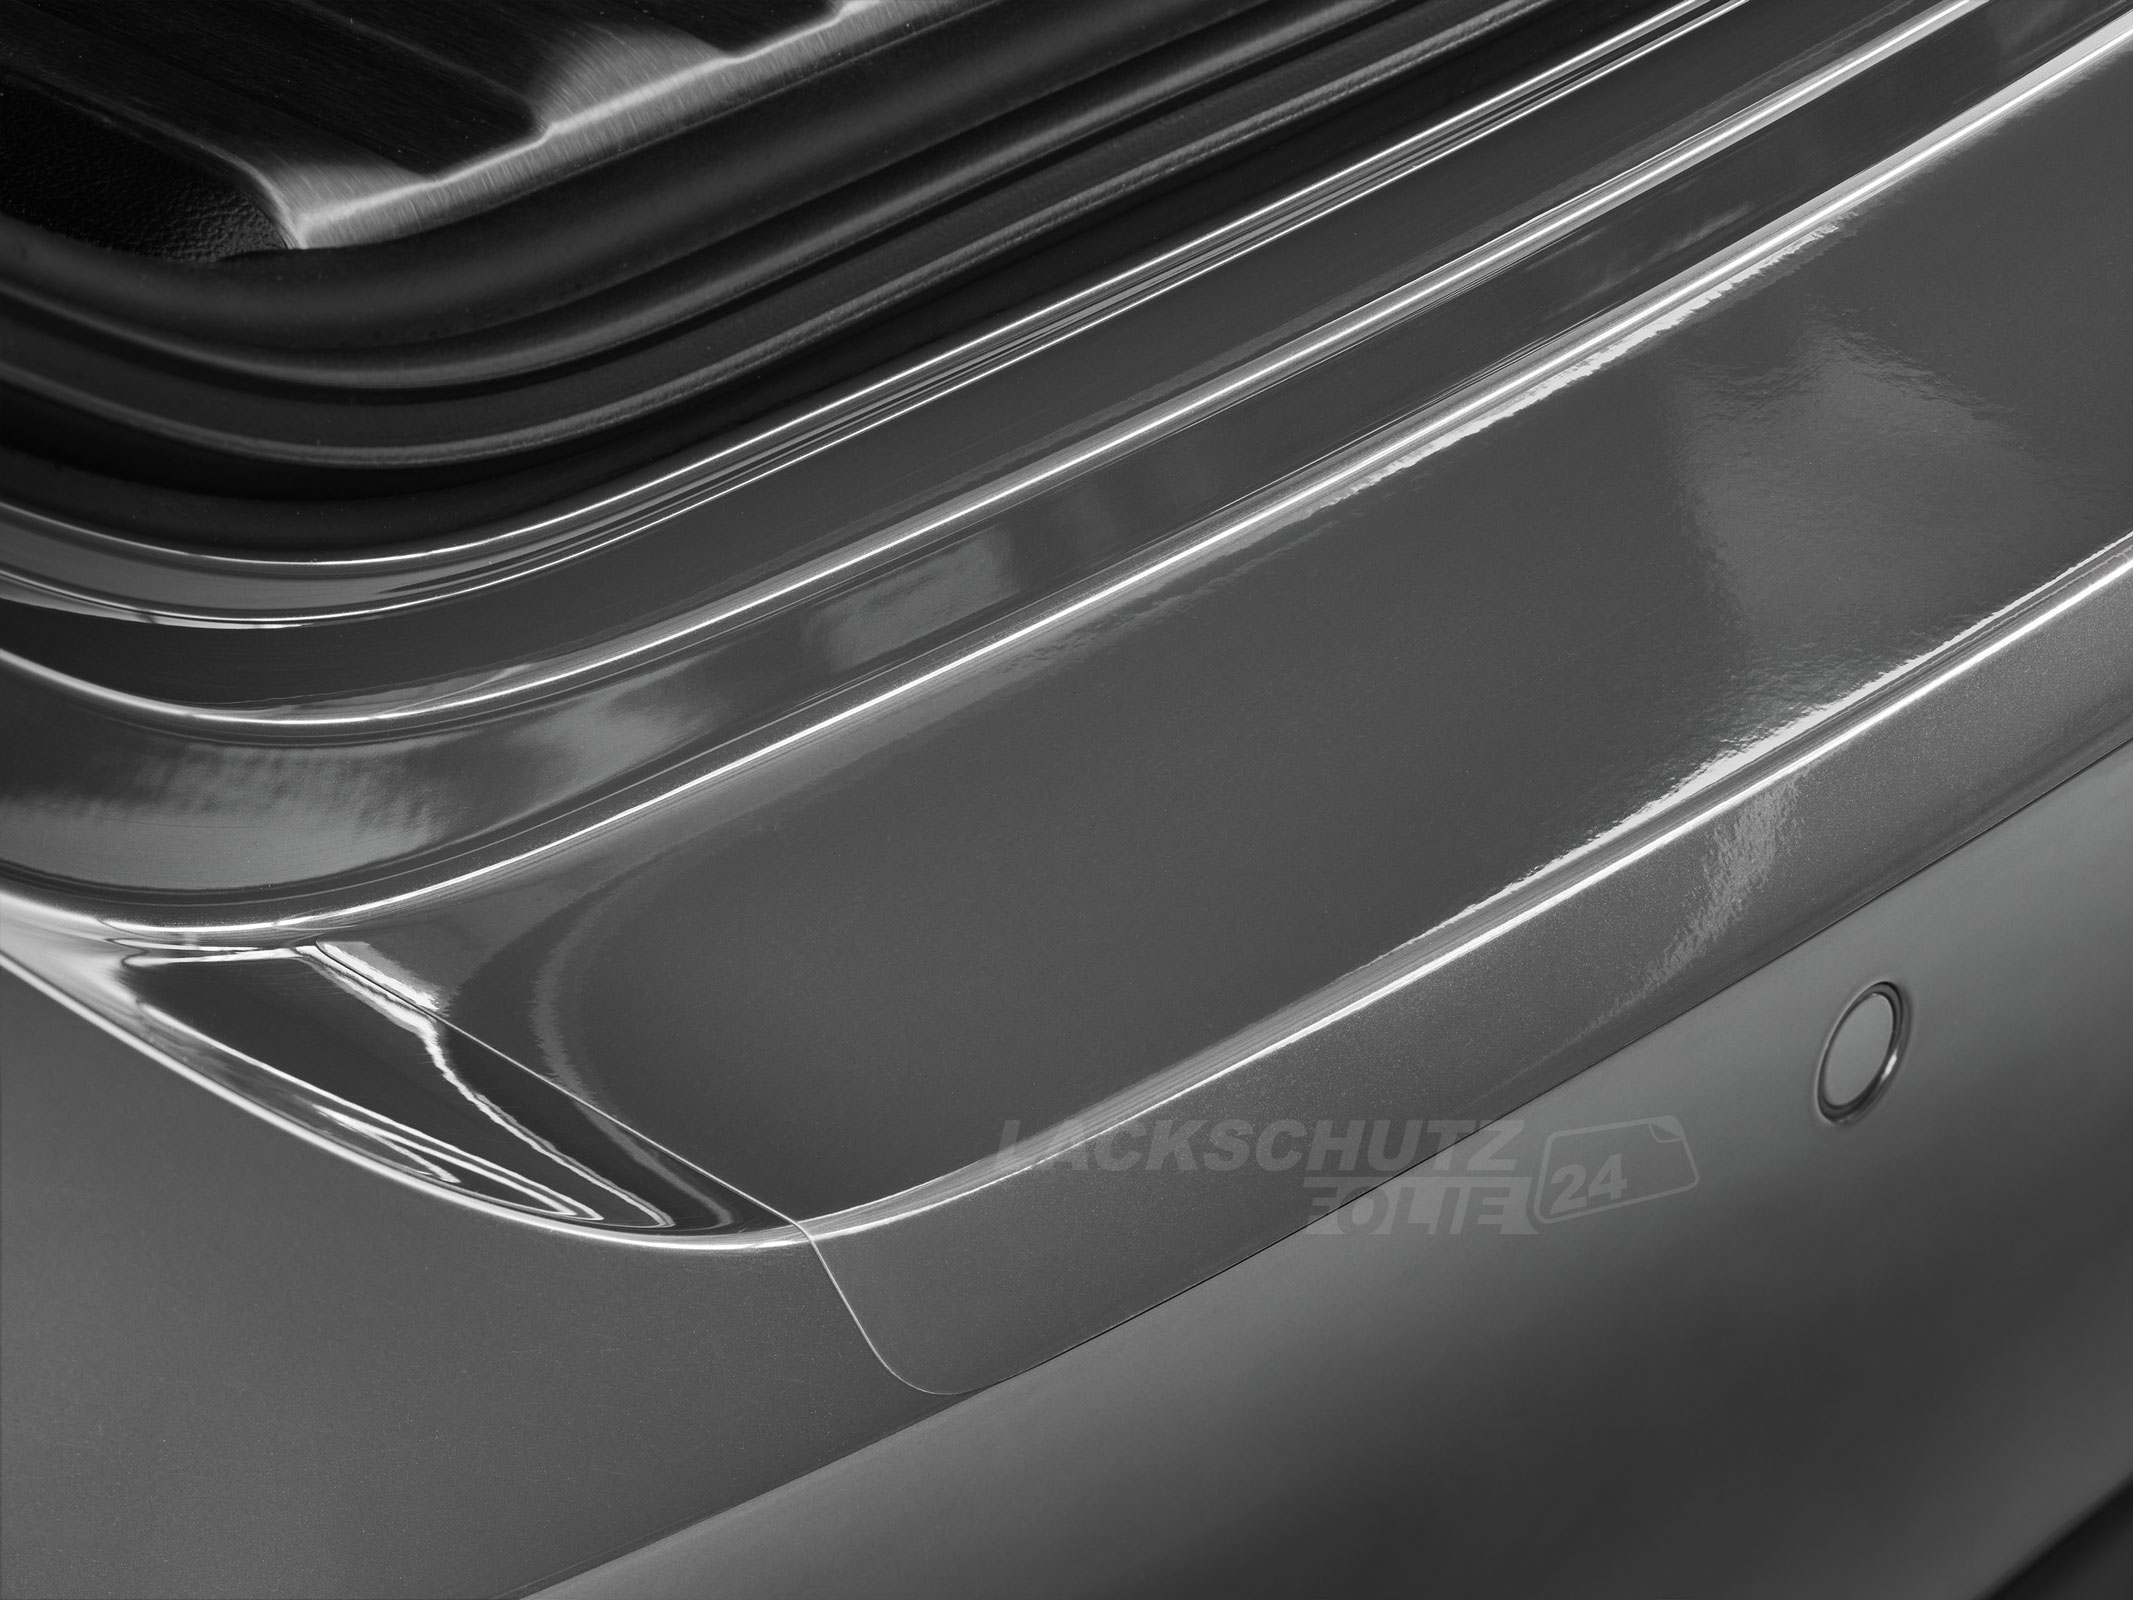 Ladekantenschutzfolie - Transparent Glatt Hochglänzend für BMW 3er Touring (Kombi) Typ F31, Facelift, BJ 05/2015-08/2019